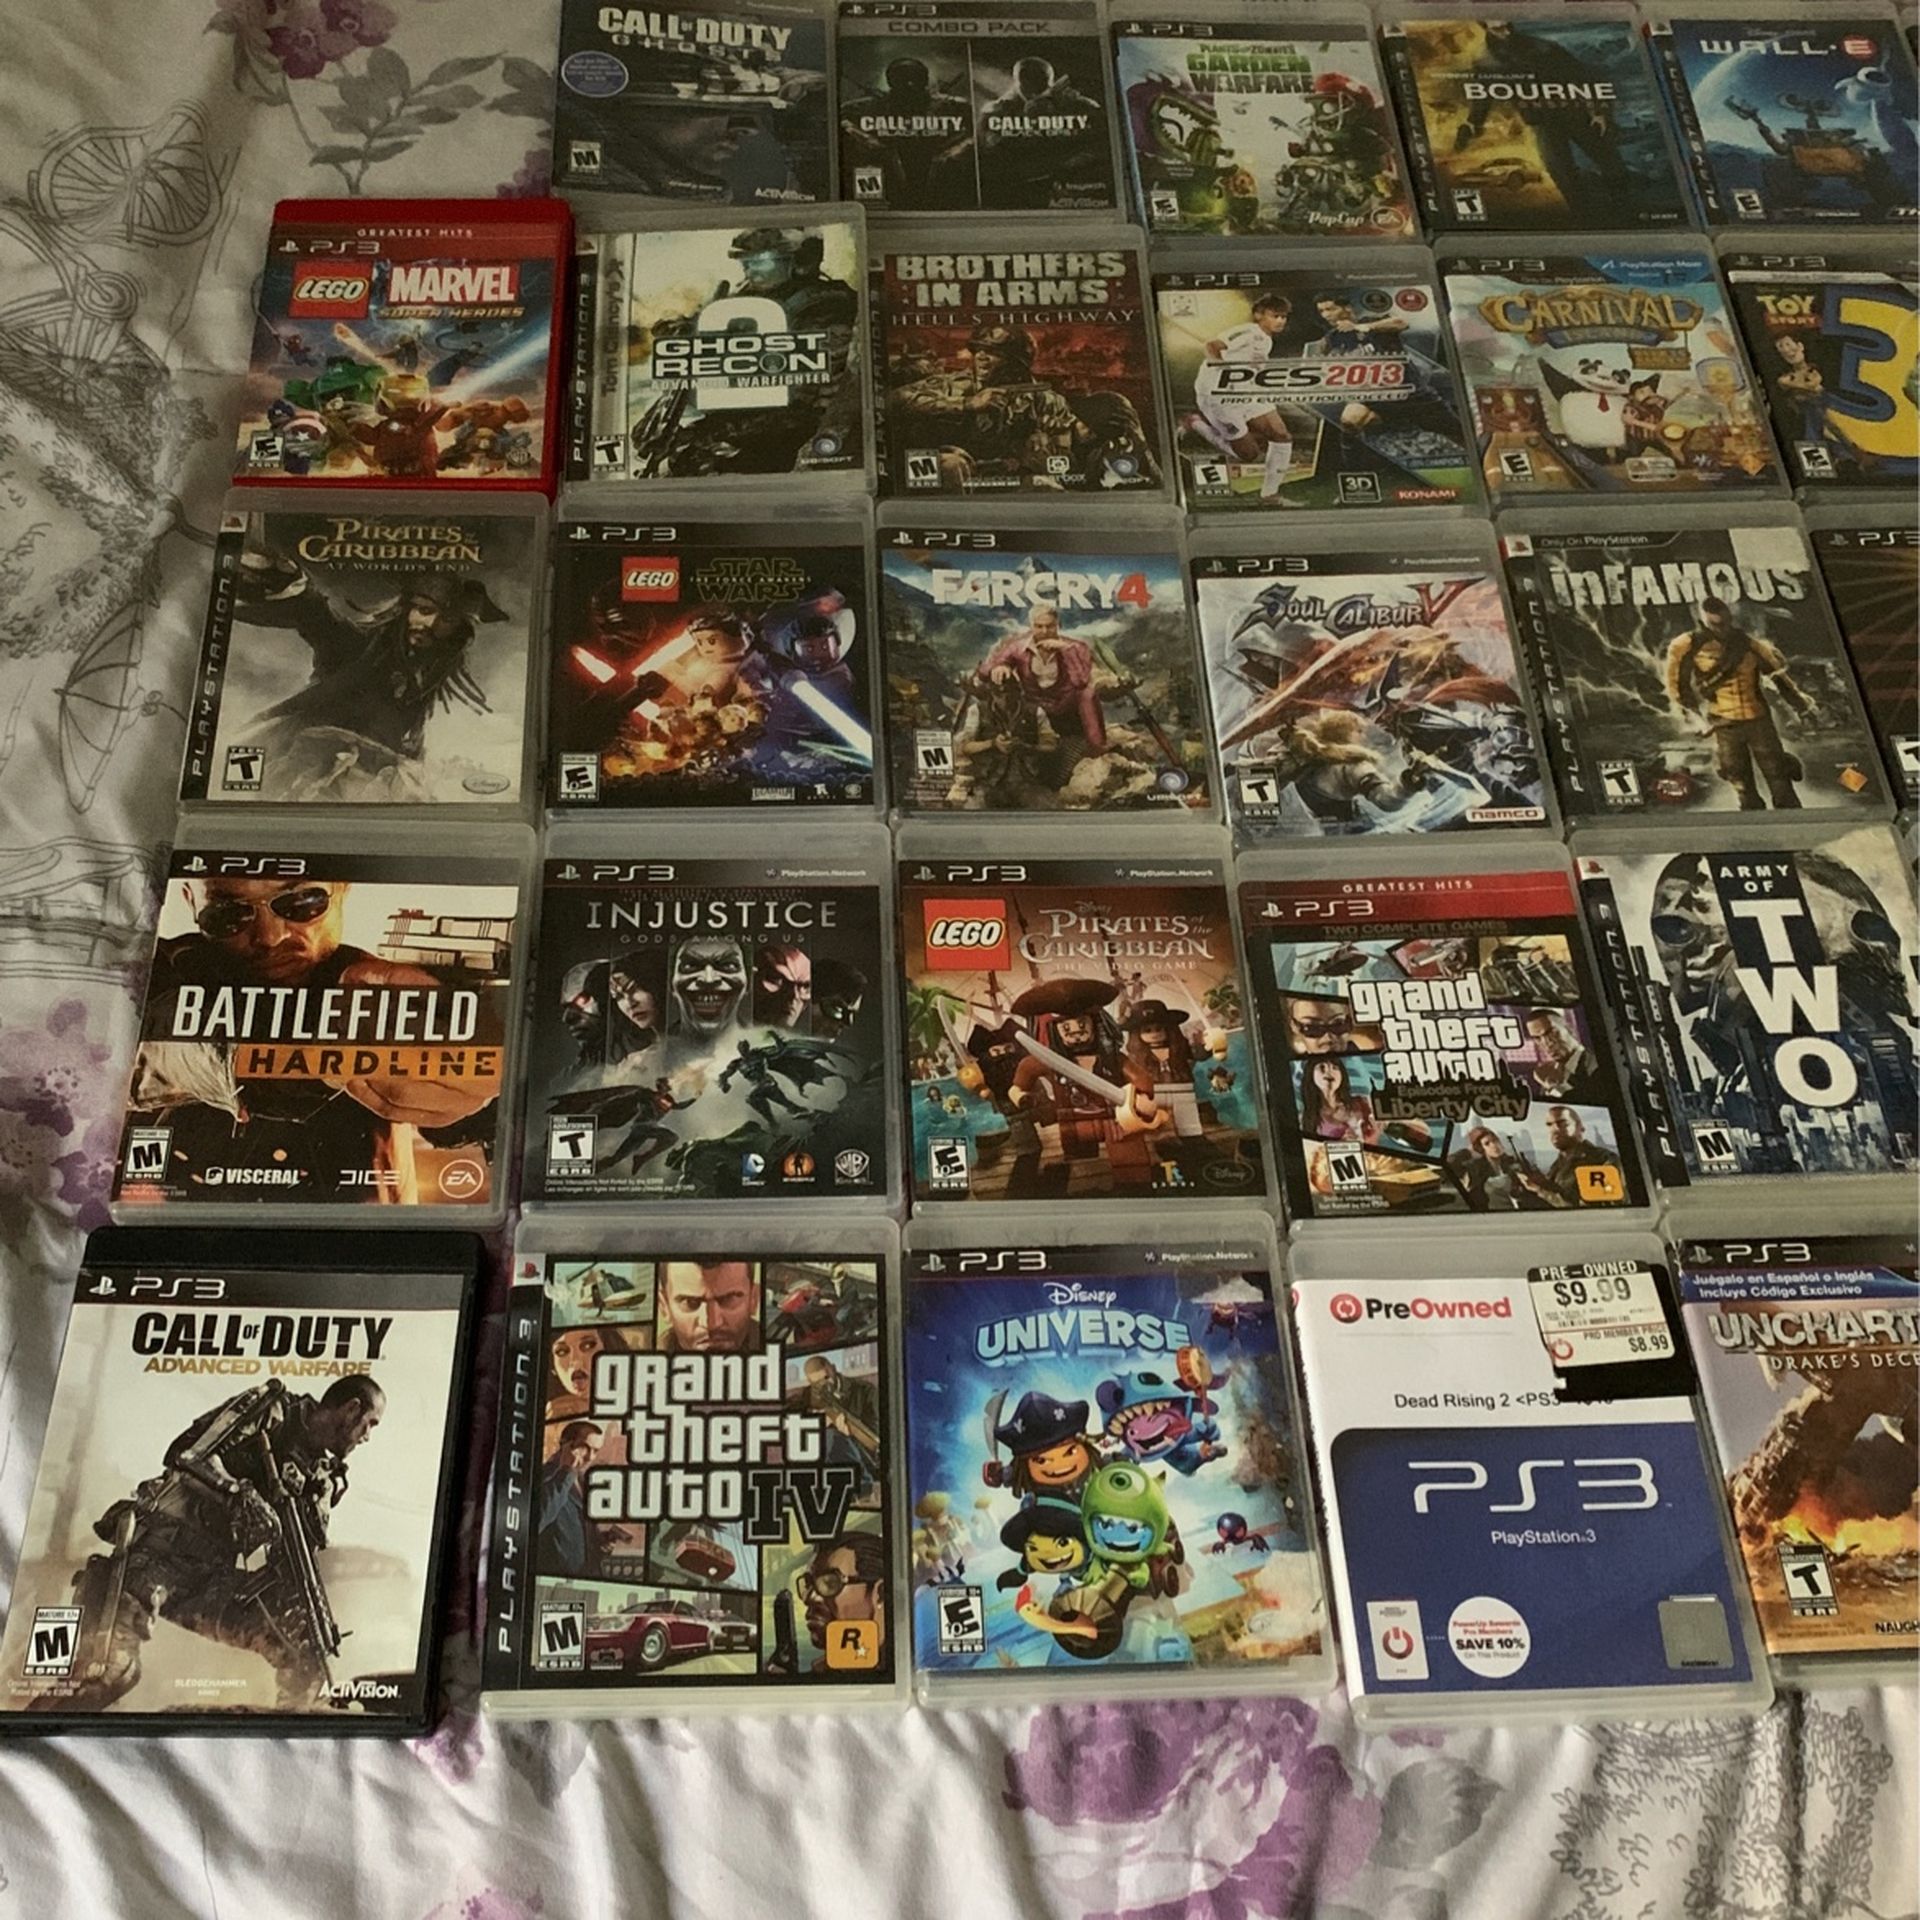 48 PS3 Games